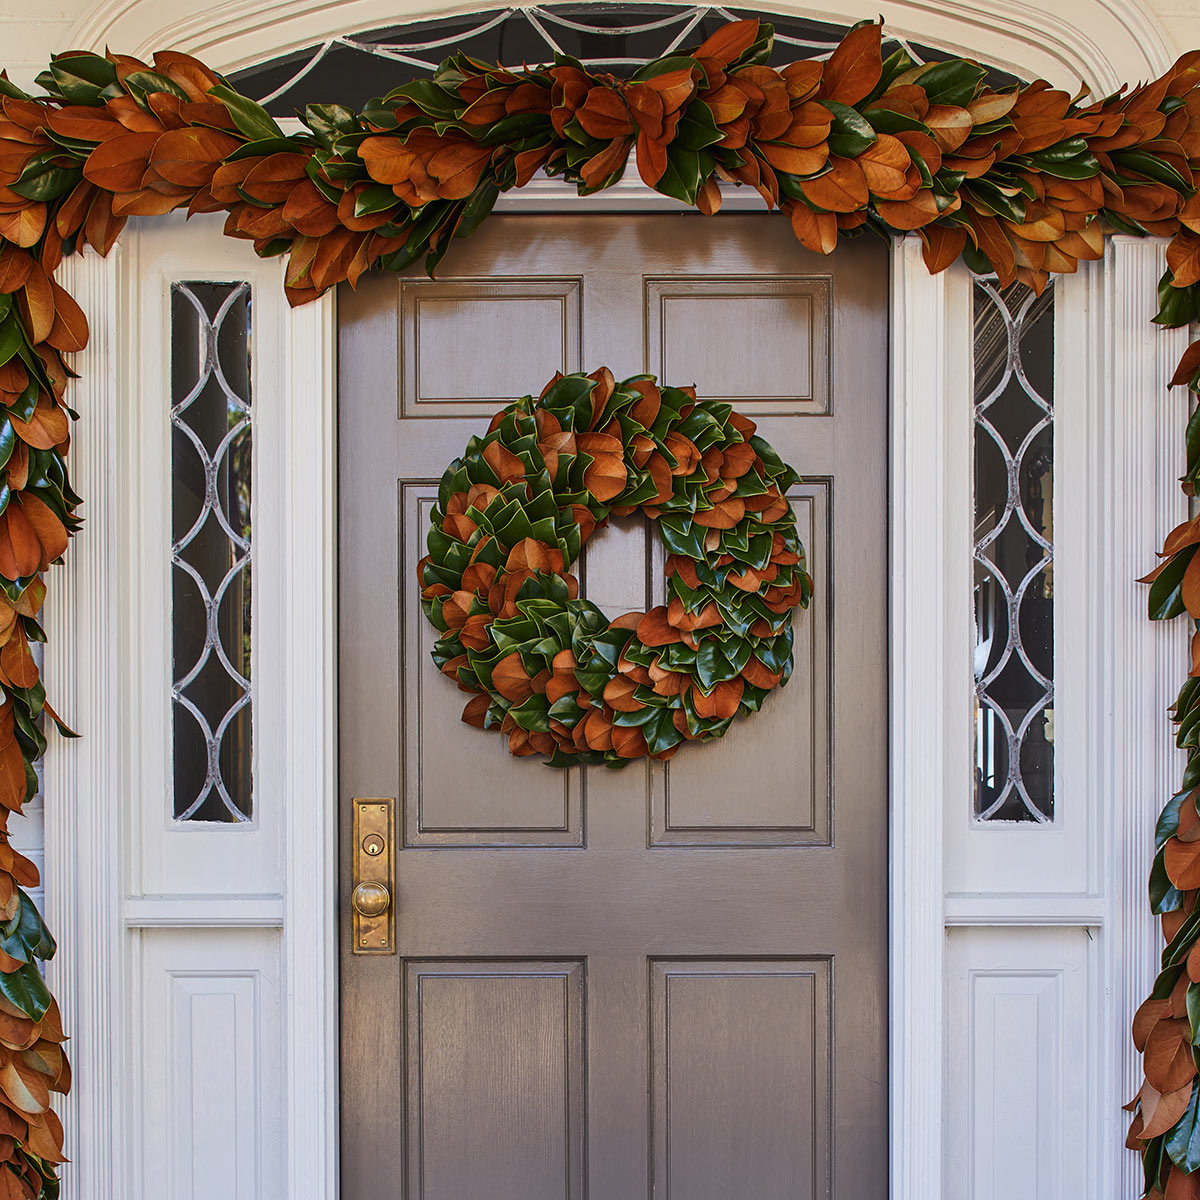 South Texas Home Decor - Wreaths Farmhouse MINI Wreath for Front Door Green  Wreath with Bow Faux